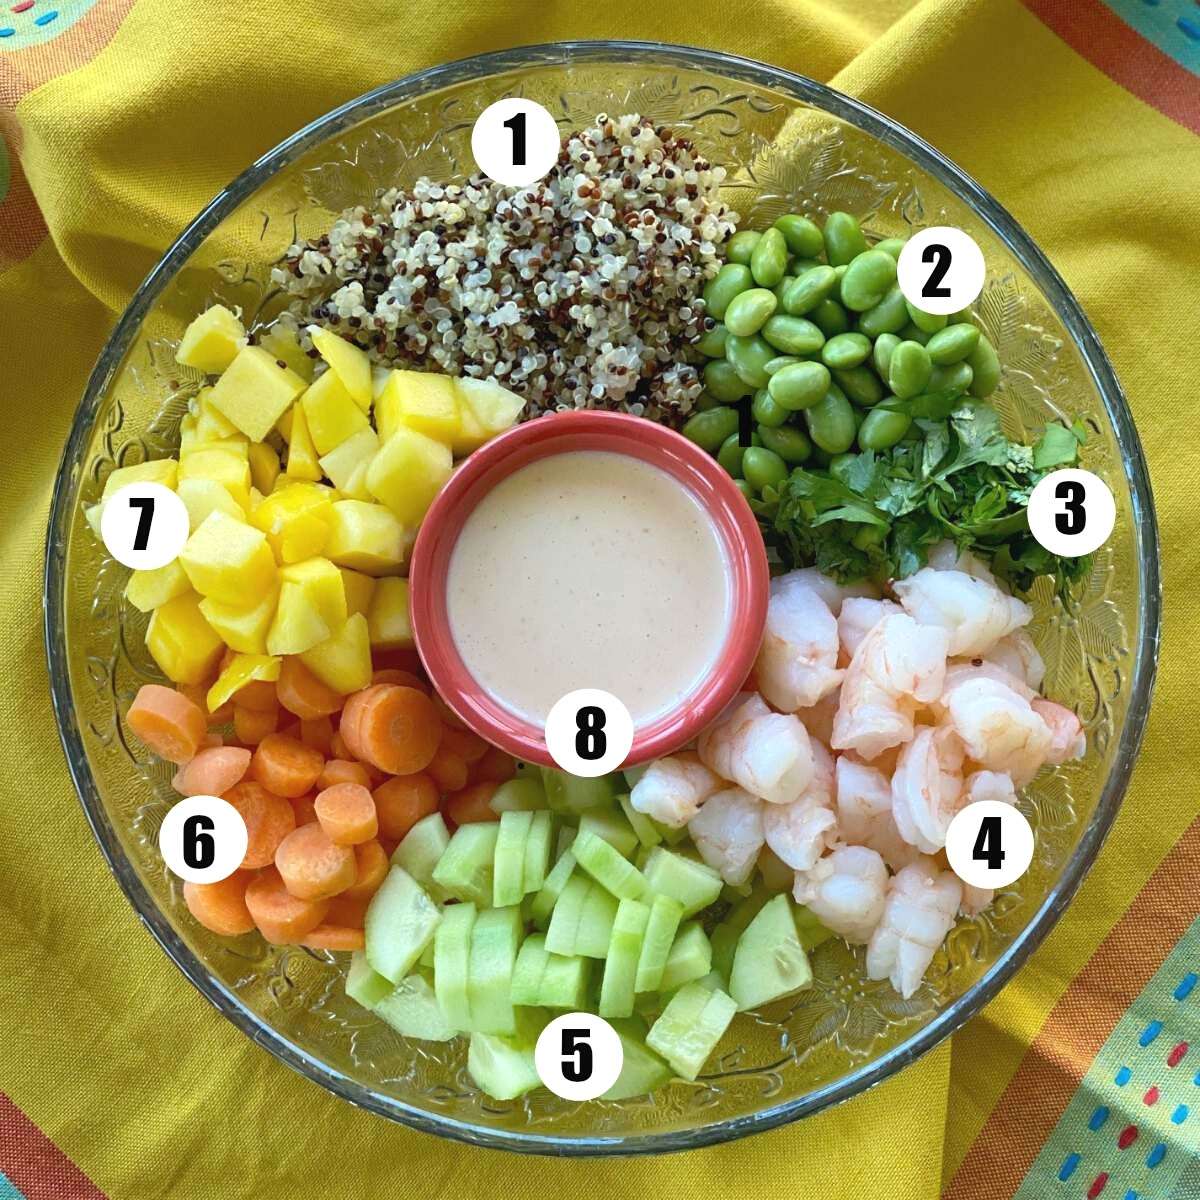 Numbered shrimp poke bowl recipe ingredients on plate.